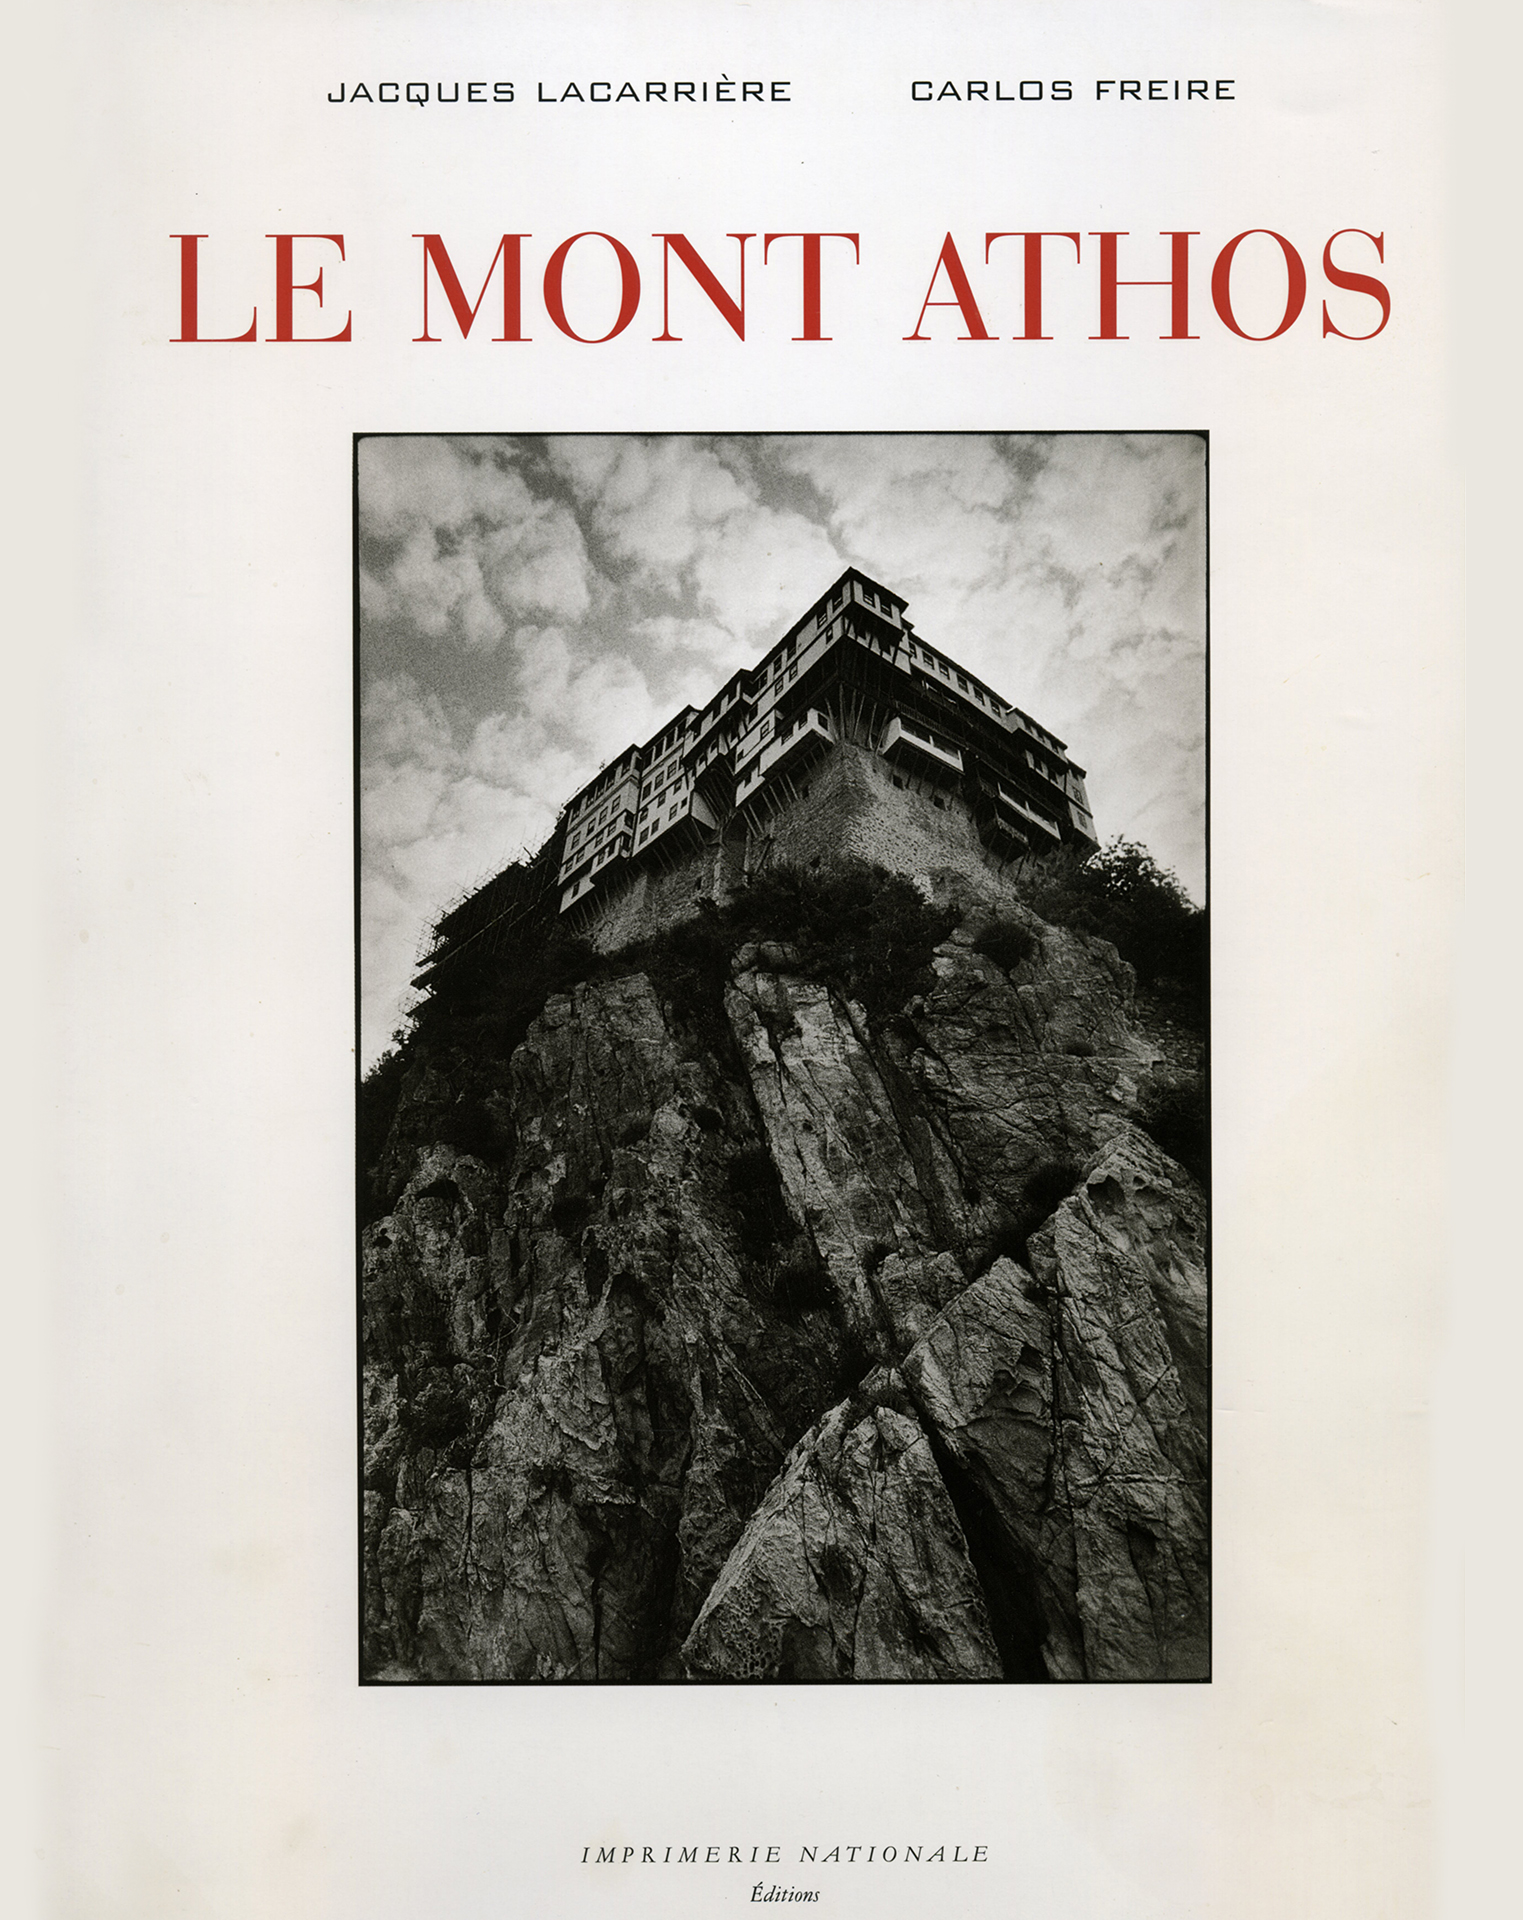 Mount Athos with Jacques Lacarrière